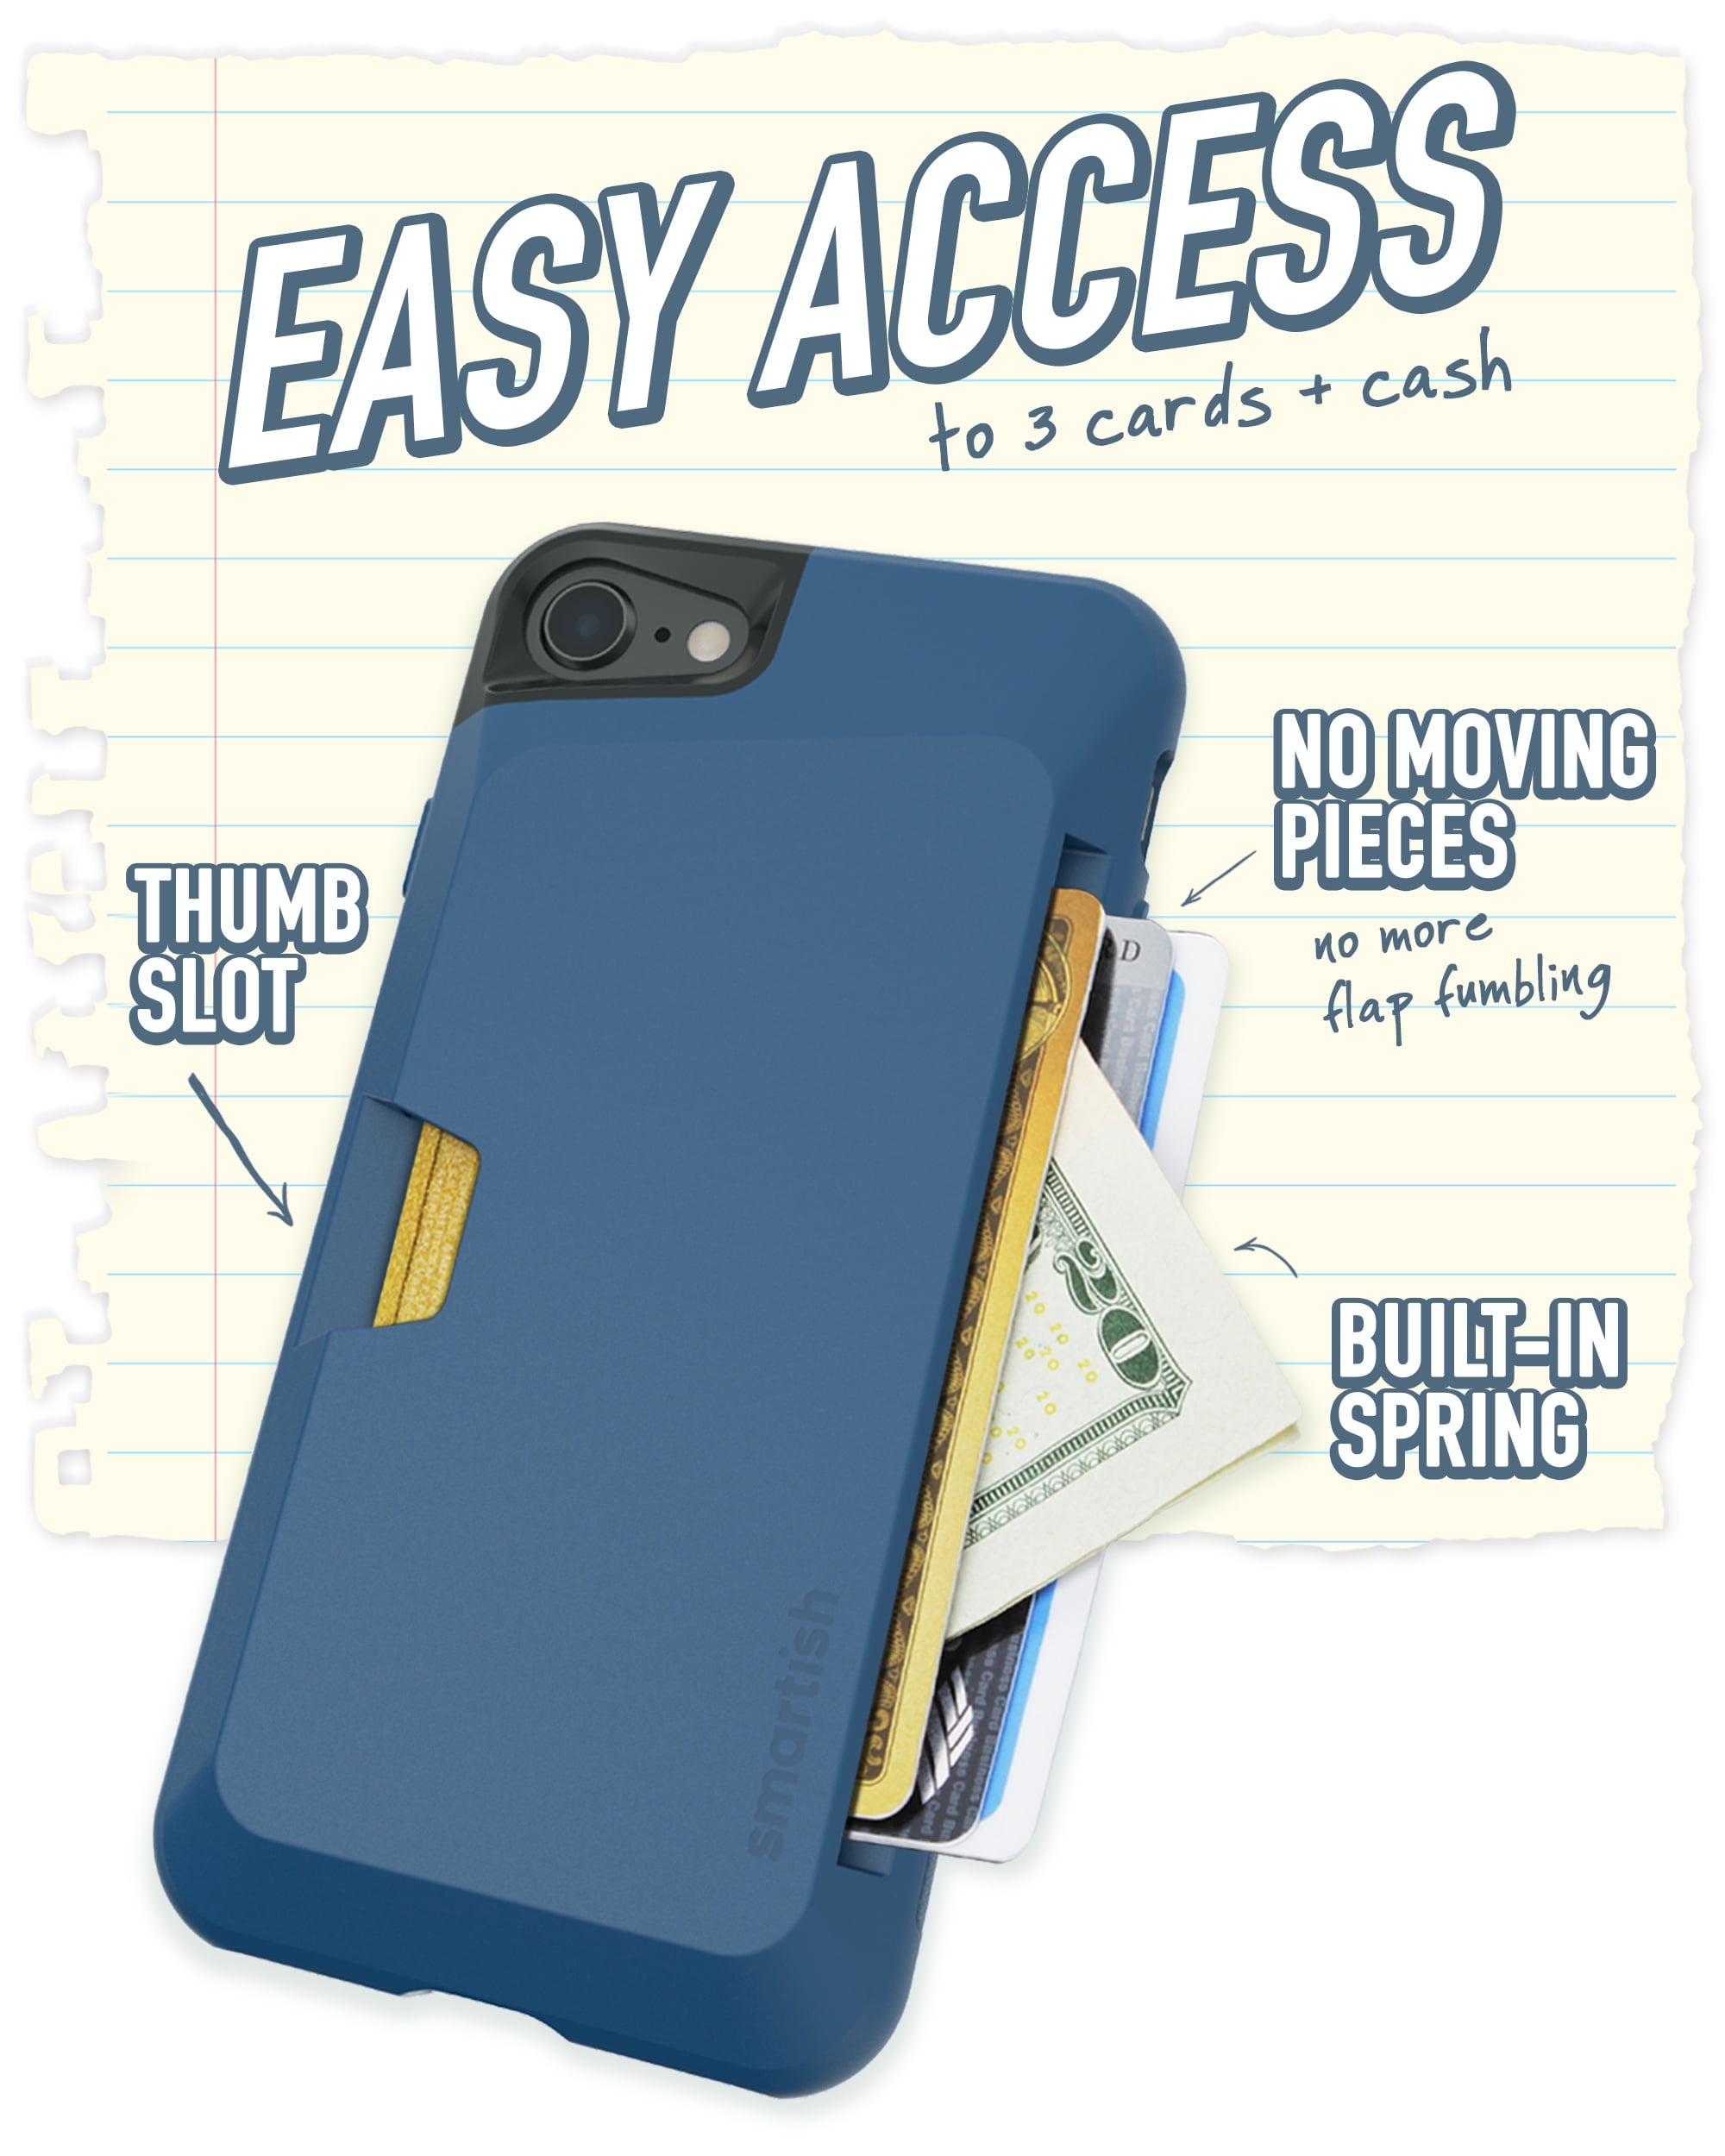 Silk iPhone x Wallet Case - Q Card Case [Slim Protective Kickstand CM4 iPhone 10 Grip Cover] - Wallet Slayer Vol.2, Black Onyx